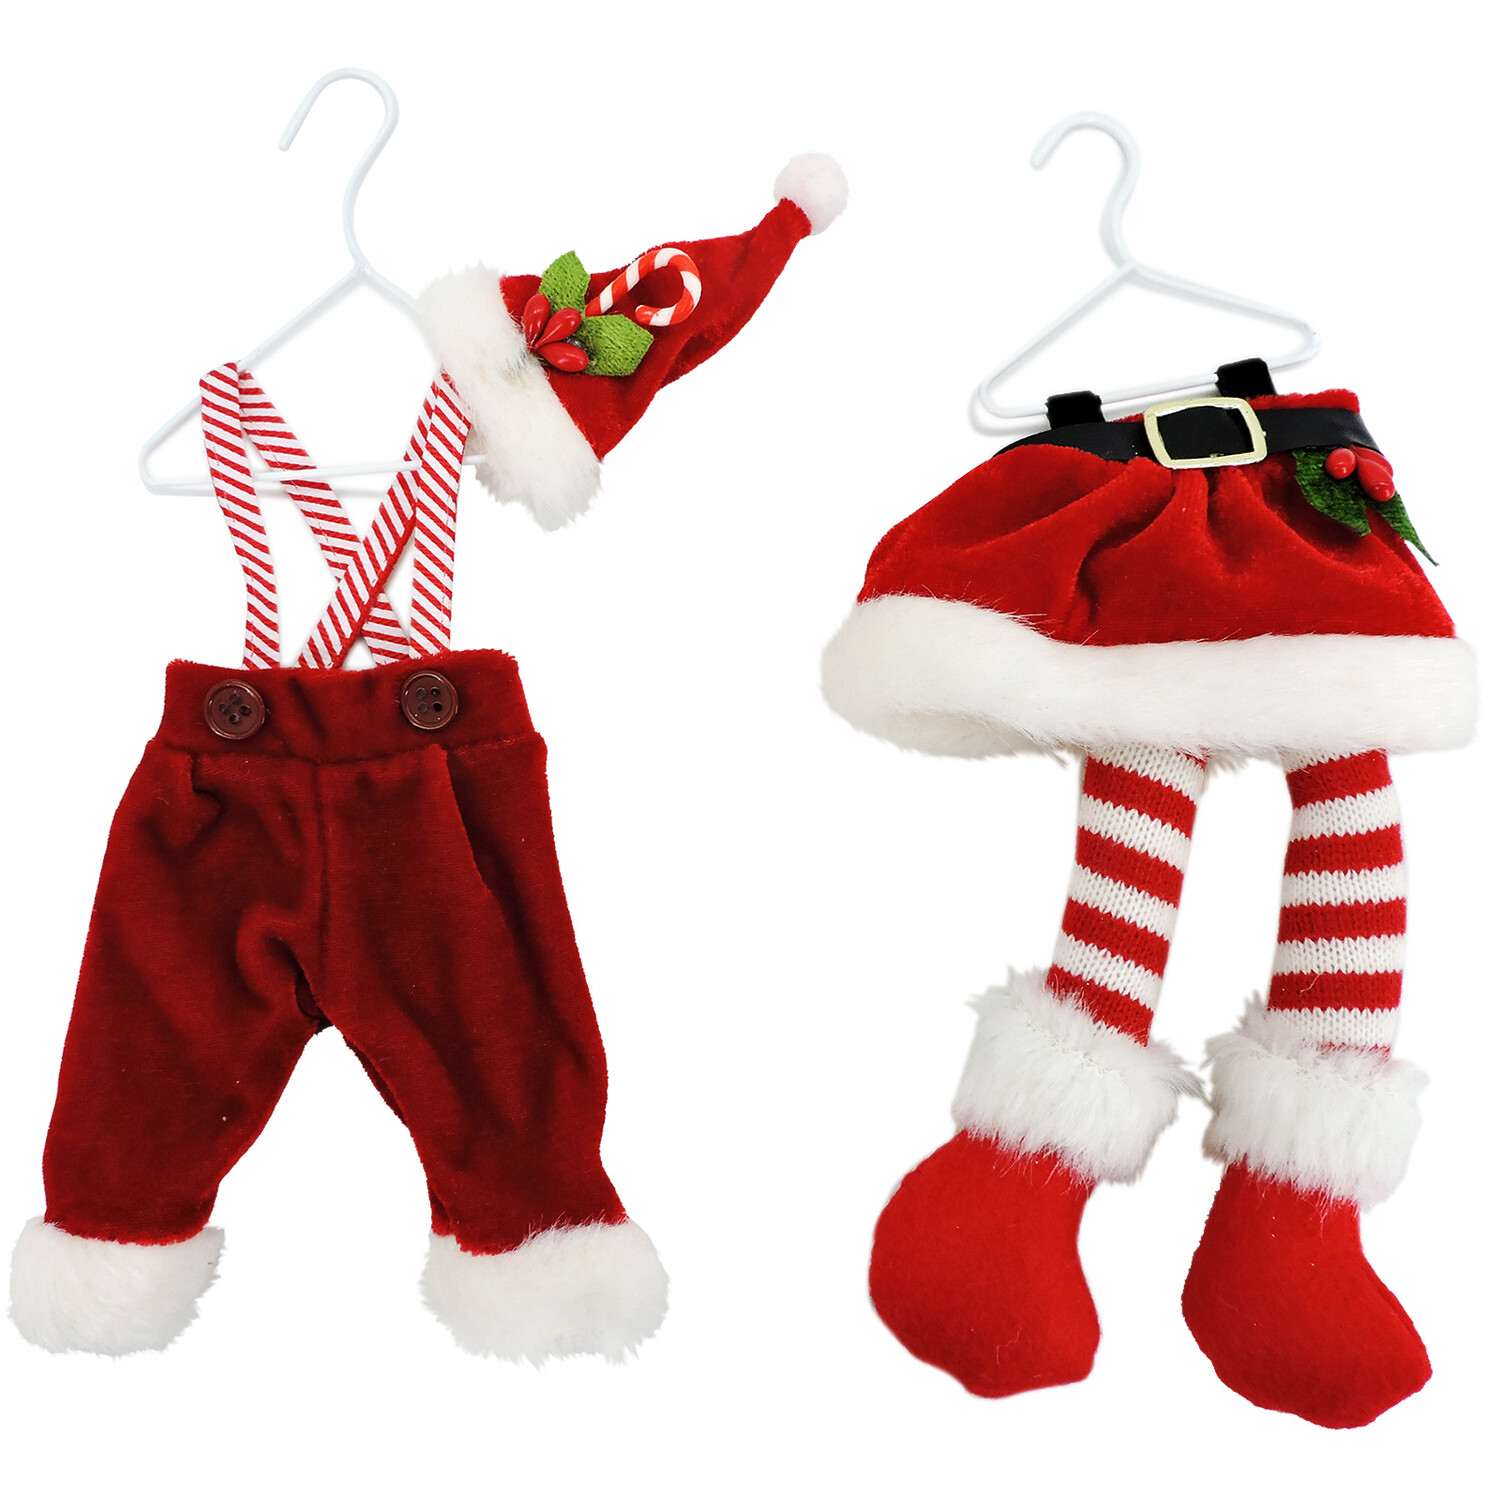 Hanging Christmas Costume - Red Image